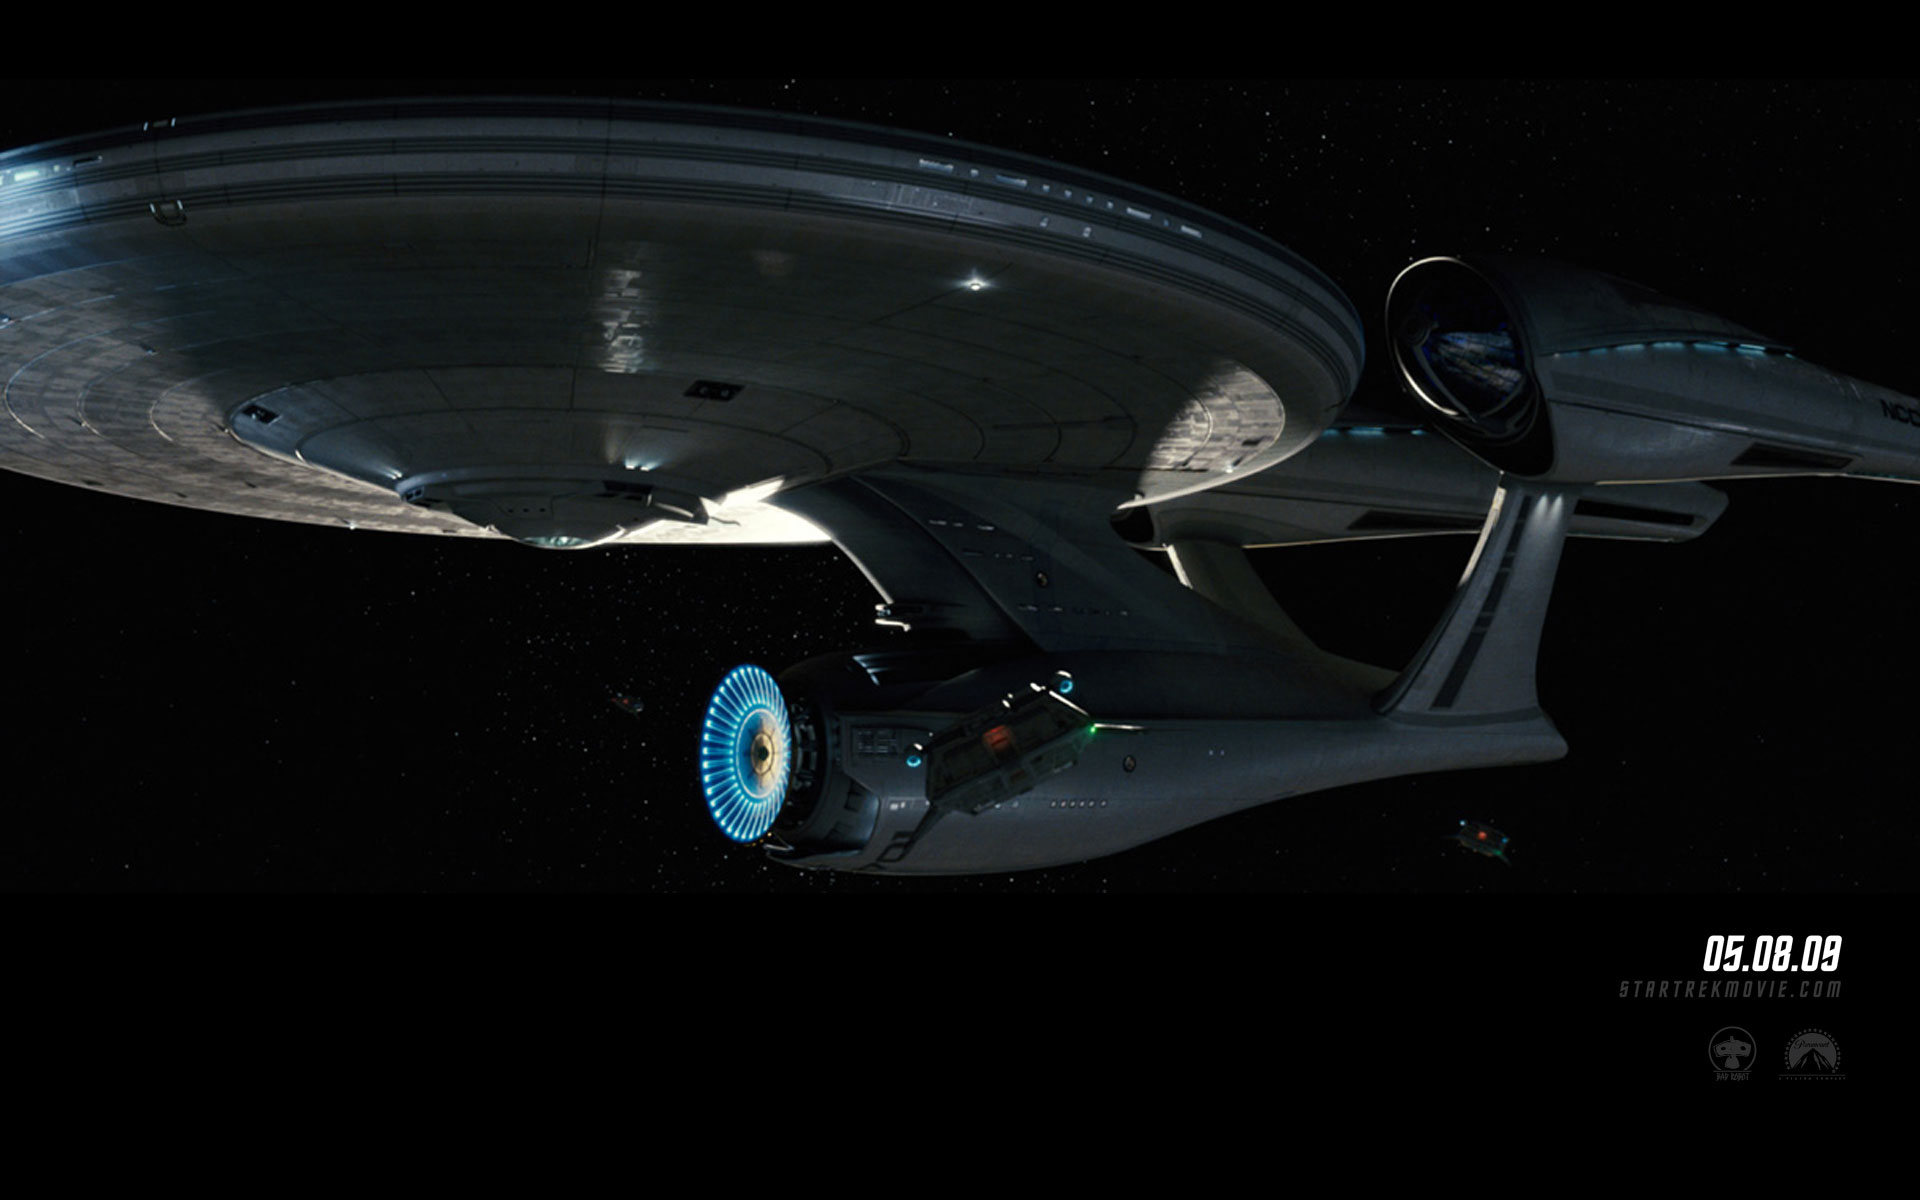 "Star Trek" desktop wallpaper number 10 - the 2009 movie version of the USS Enterprise NCC-1701 (1920 x 1200 pixels)